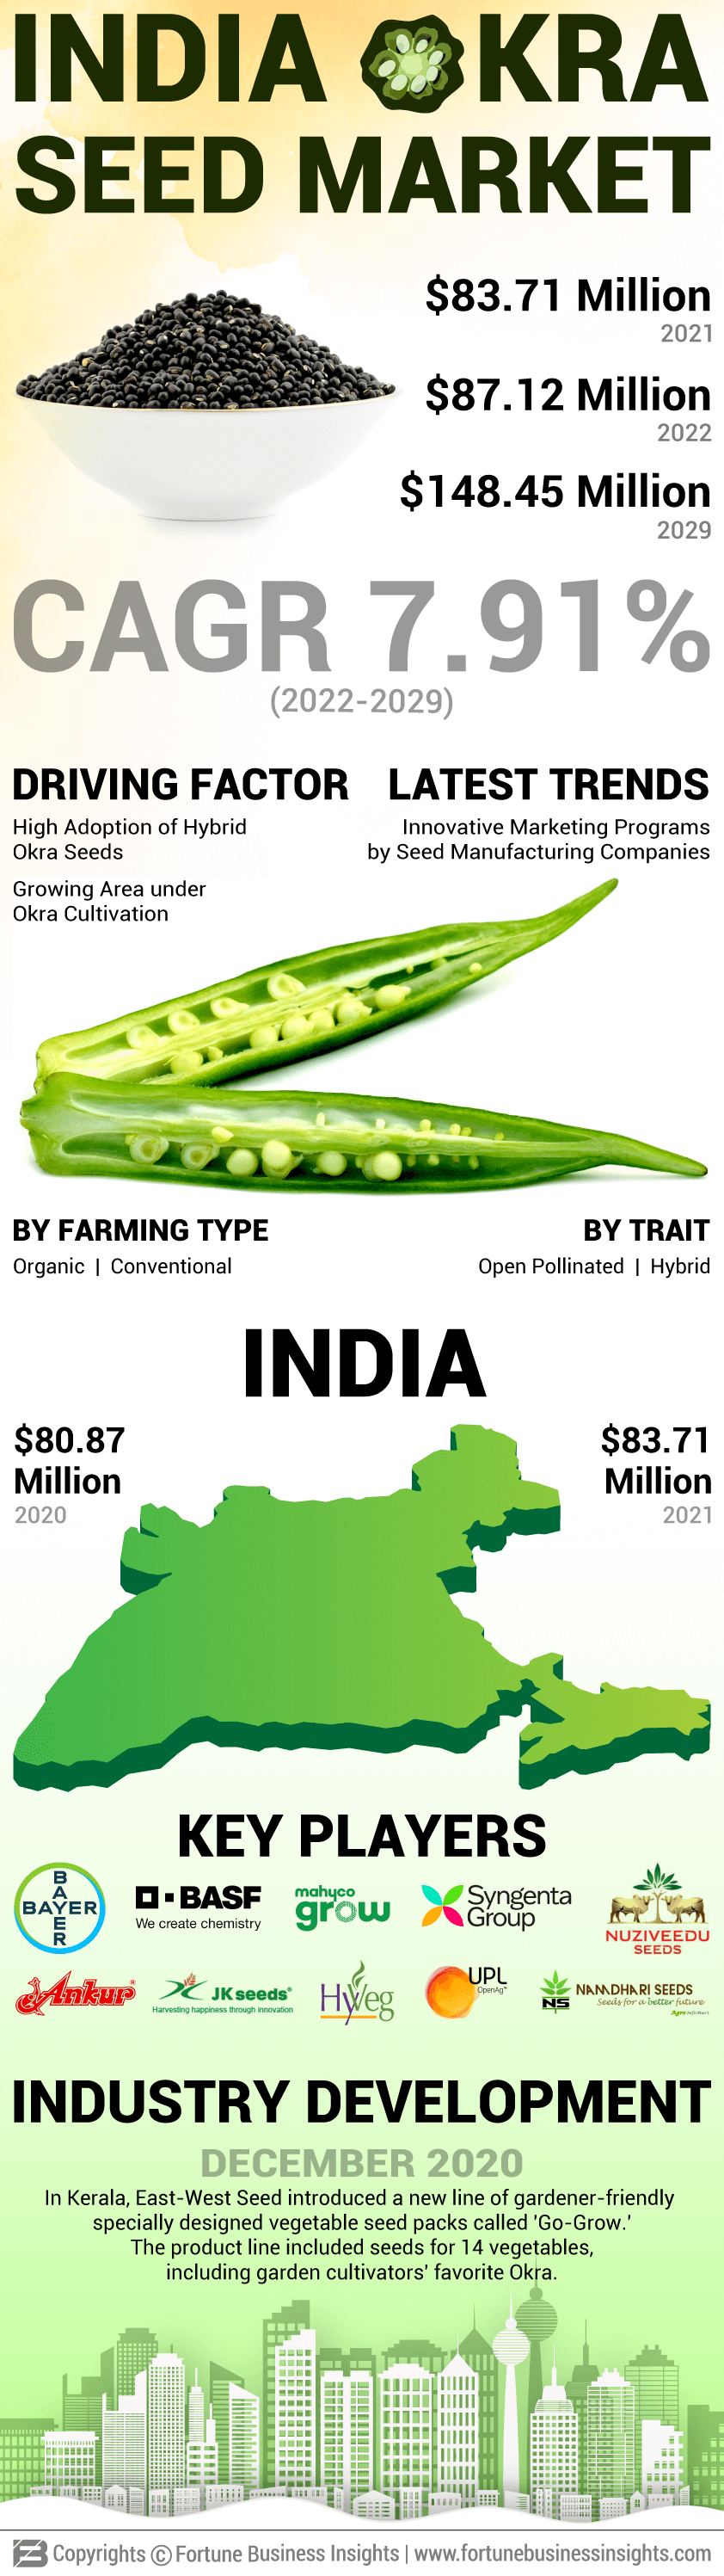 India Okra Seed Market